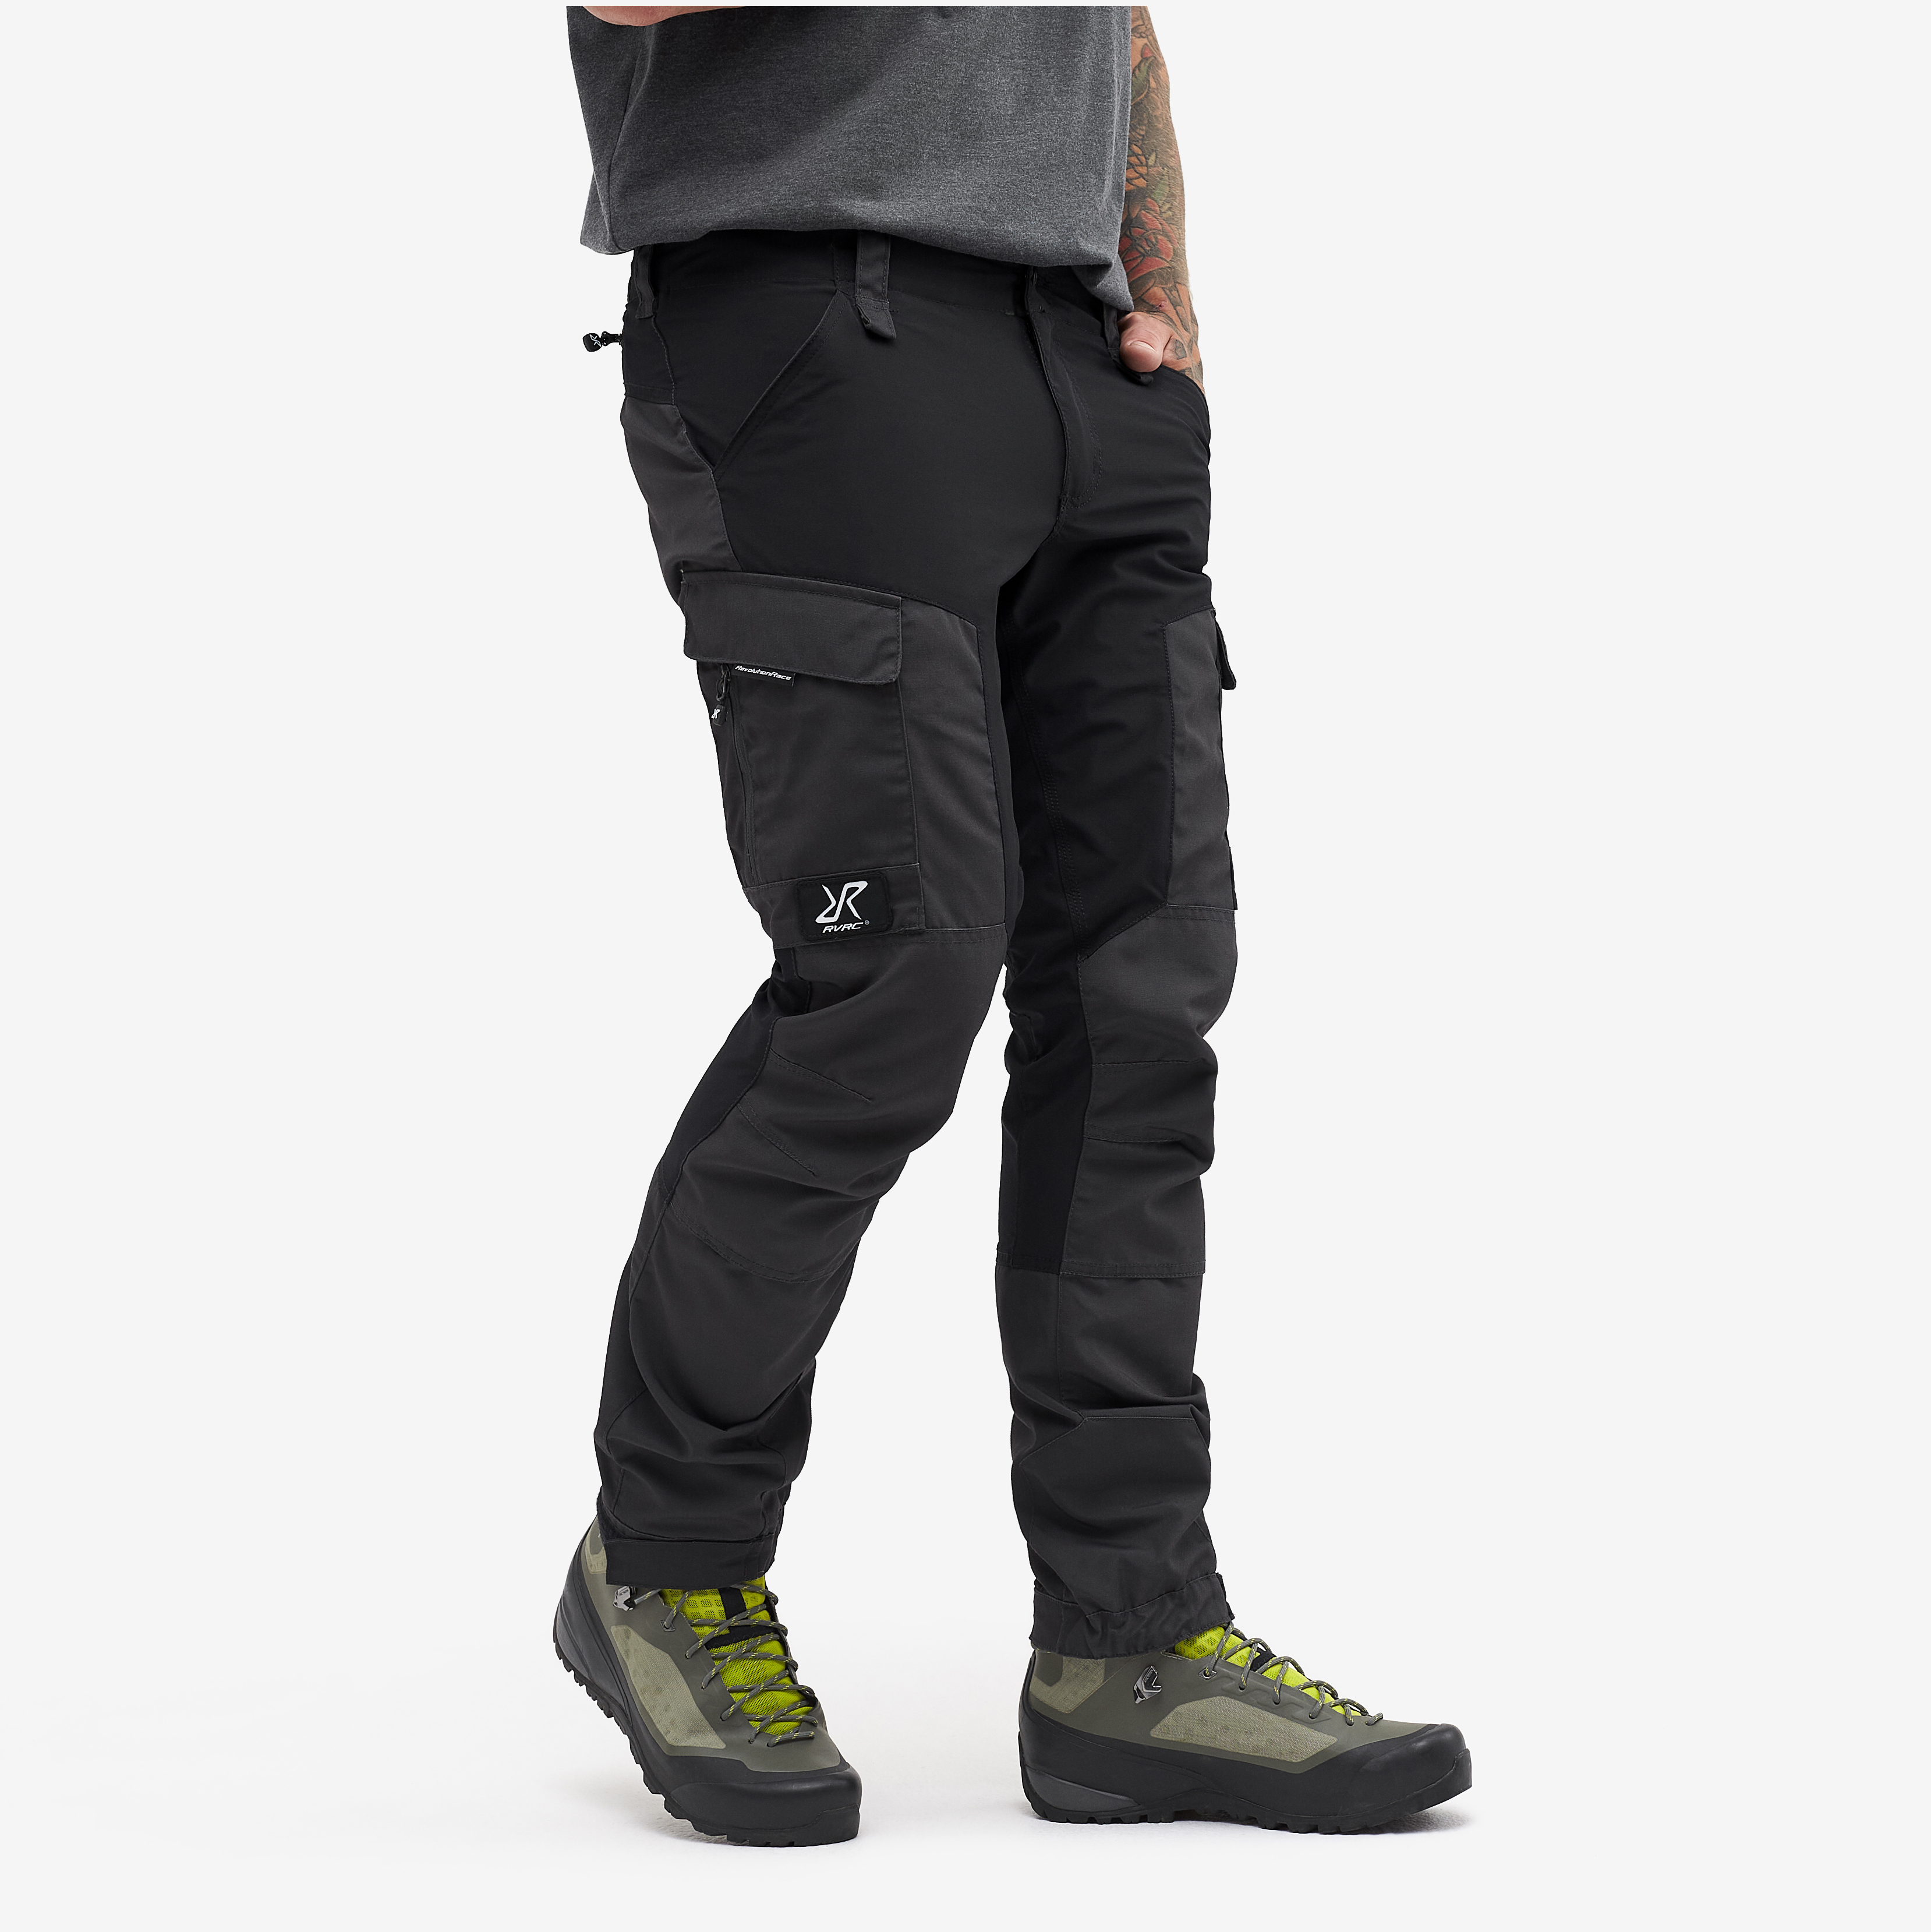 RVRC GP Short walking trousers for men in black